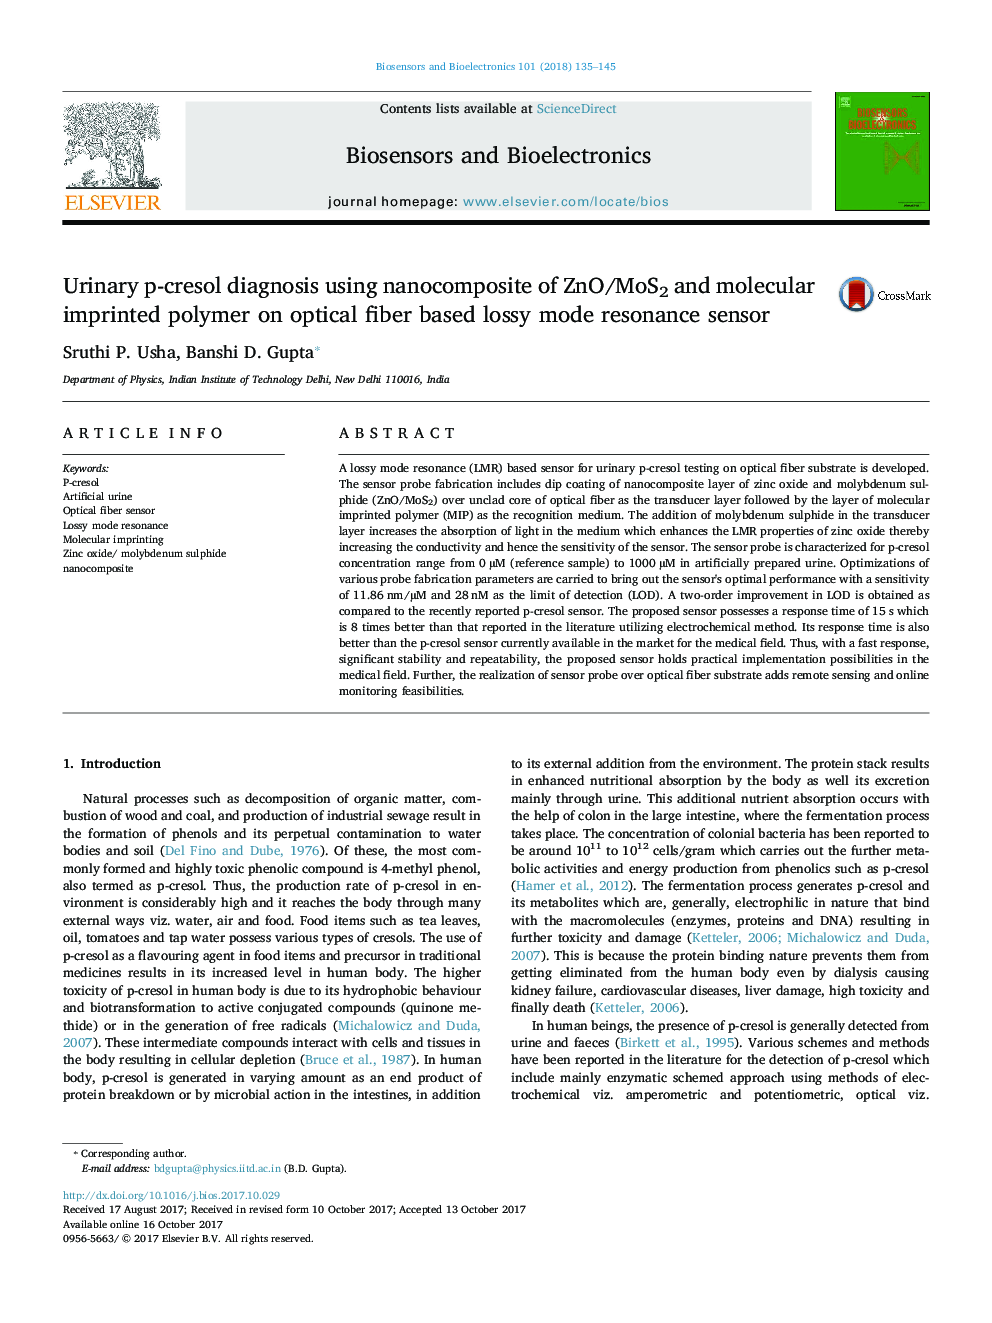 Urinary p-cresol diagnosis using nanocomposite of ZnO/MoS2 and molecular imprinted polymer on optical fiber based lossy mode resonance sensor